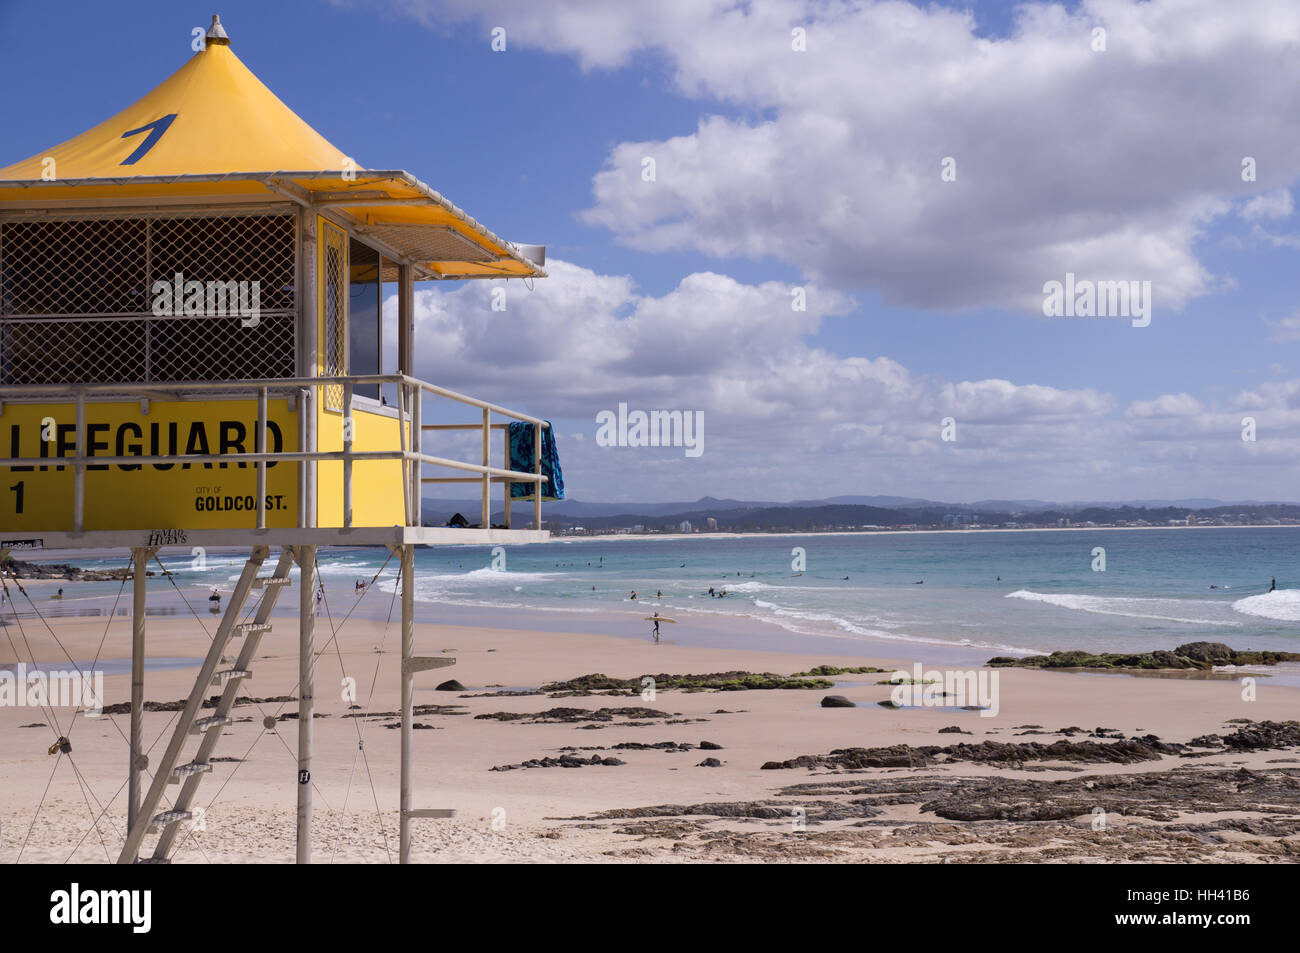 Lifeguard Tower on Beach Stock Photo